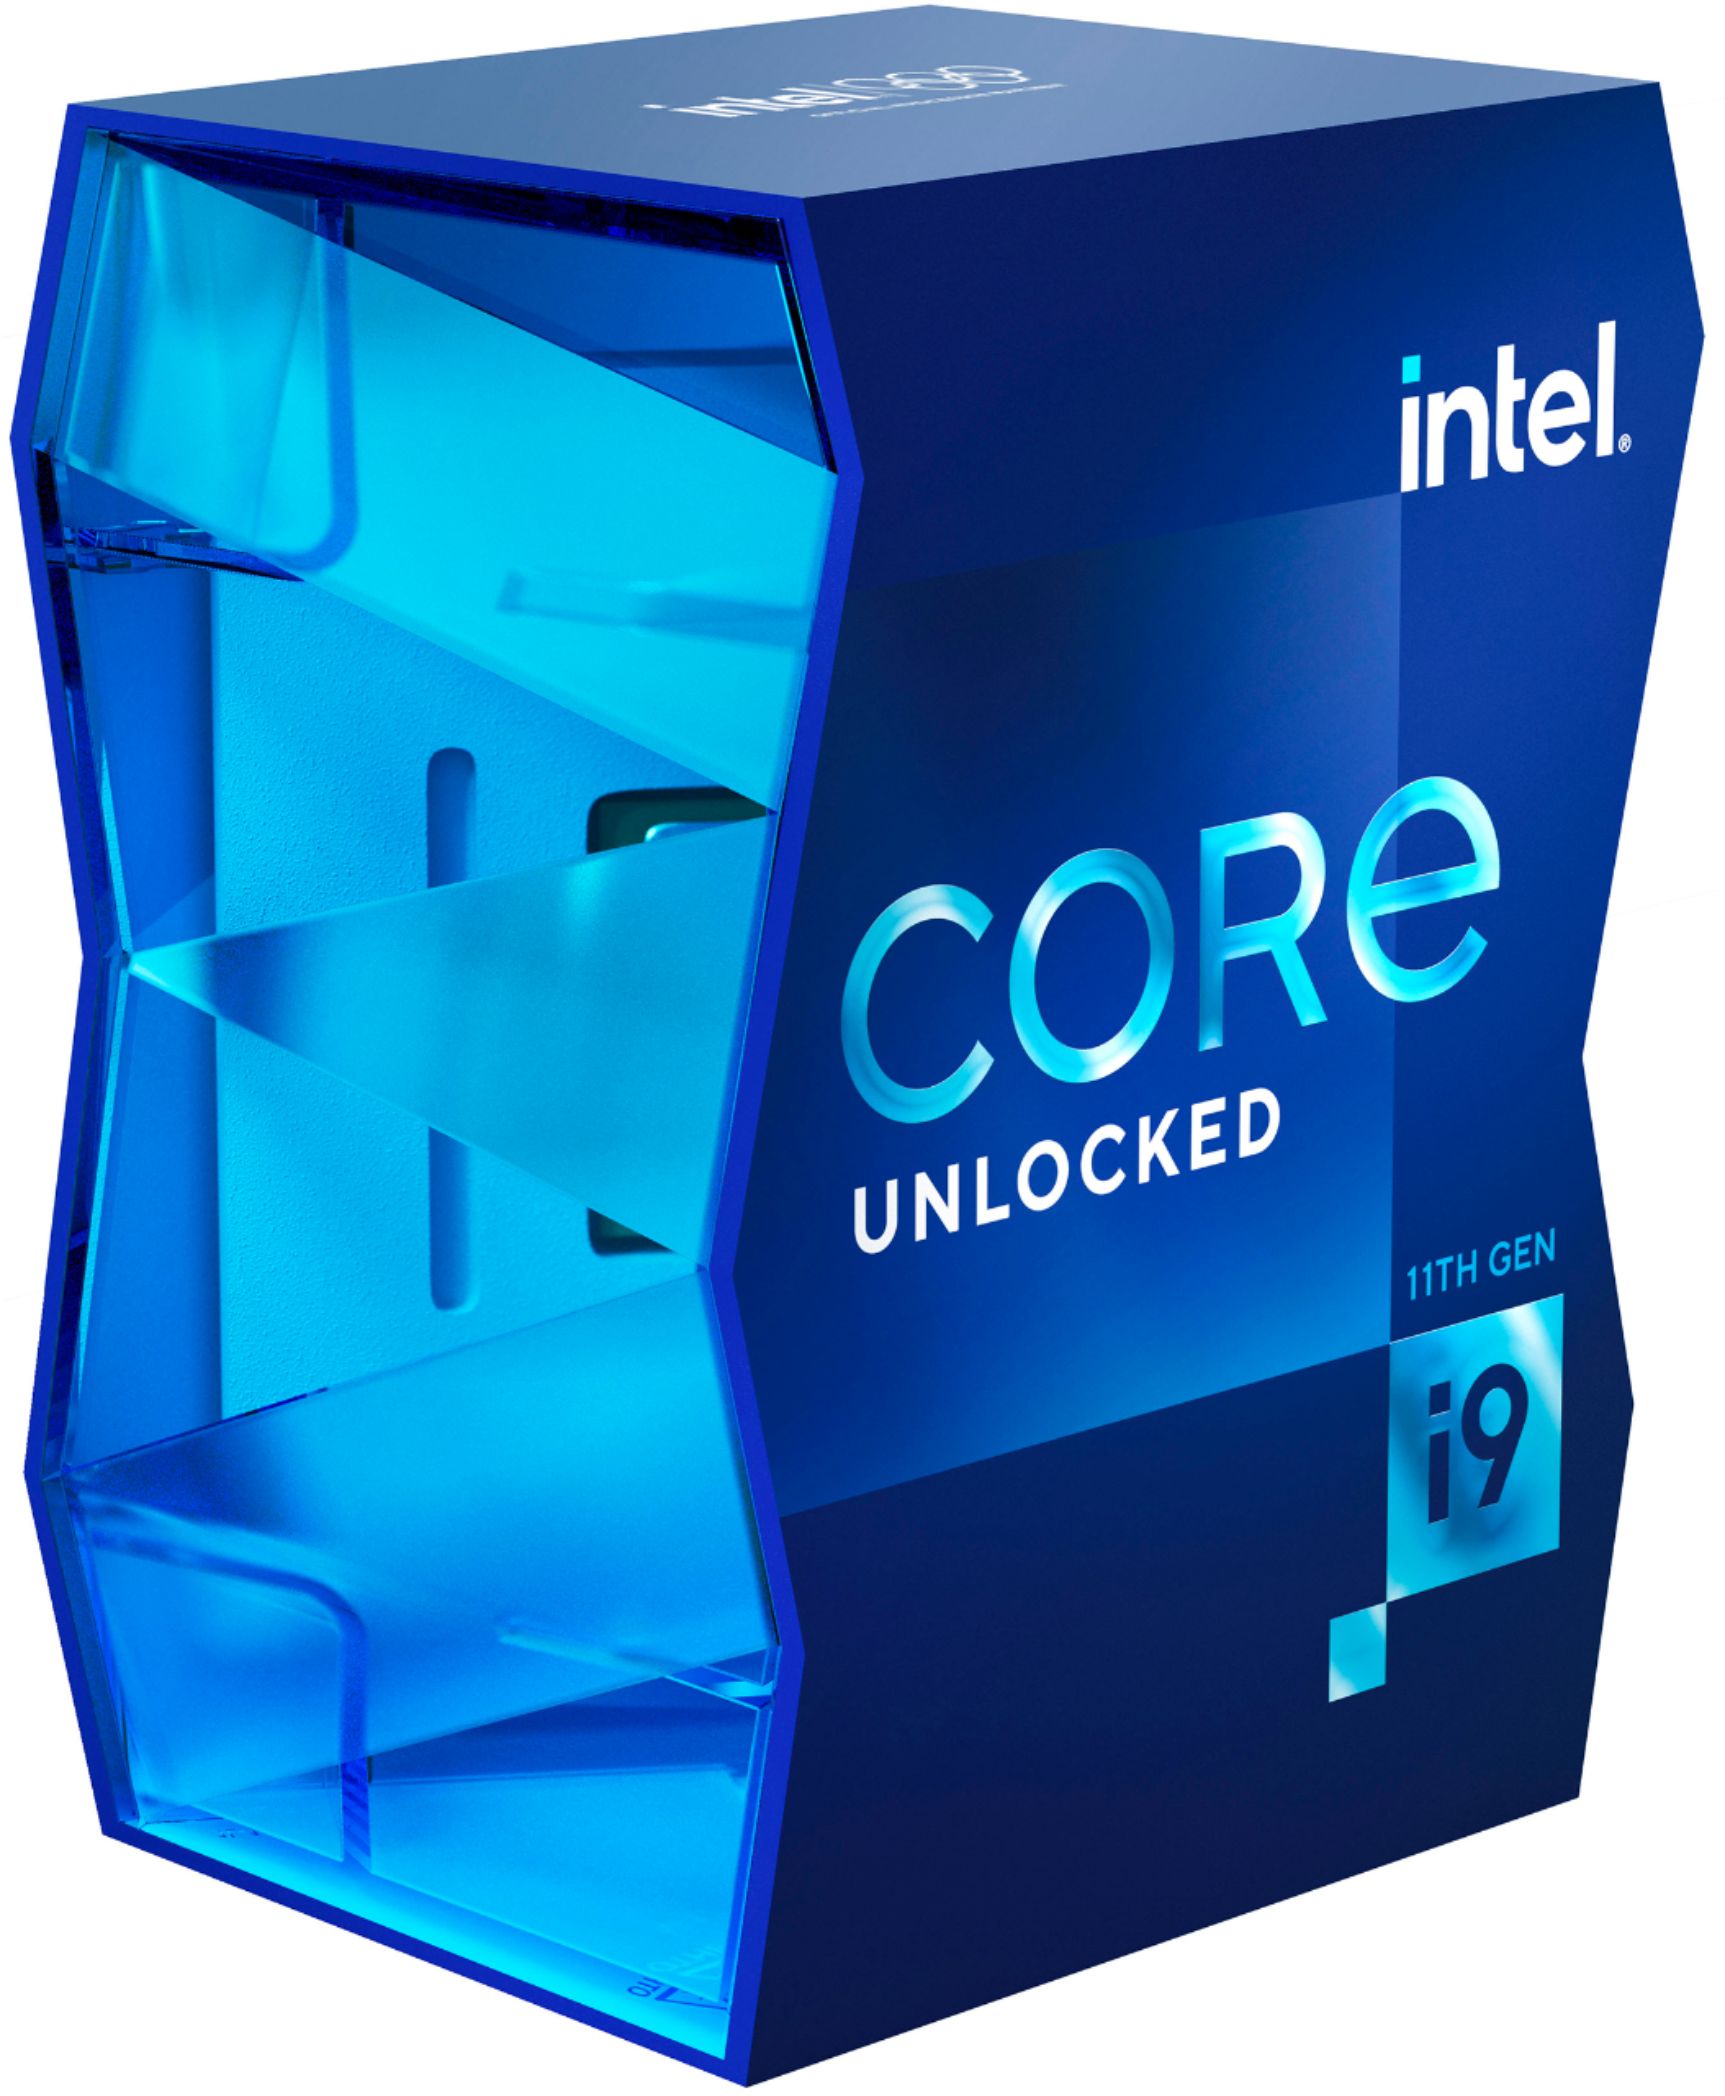 Customer Reviews: Intel Core i9-11900K 11th Generation 8 Core 16 Thread